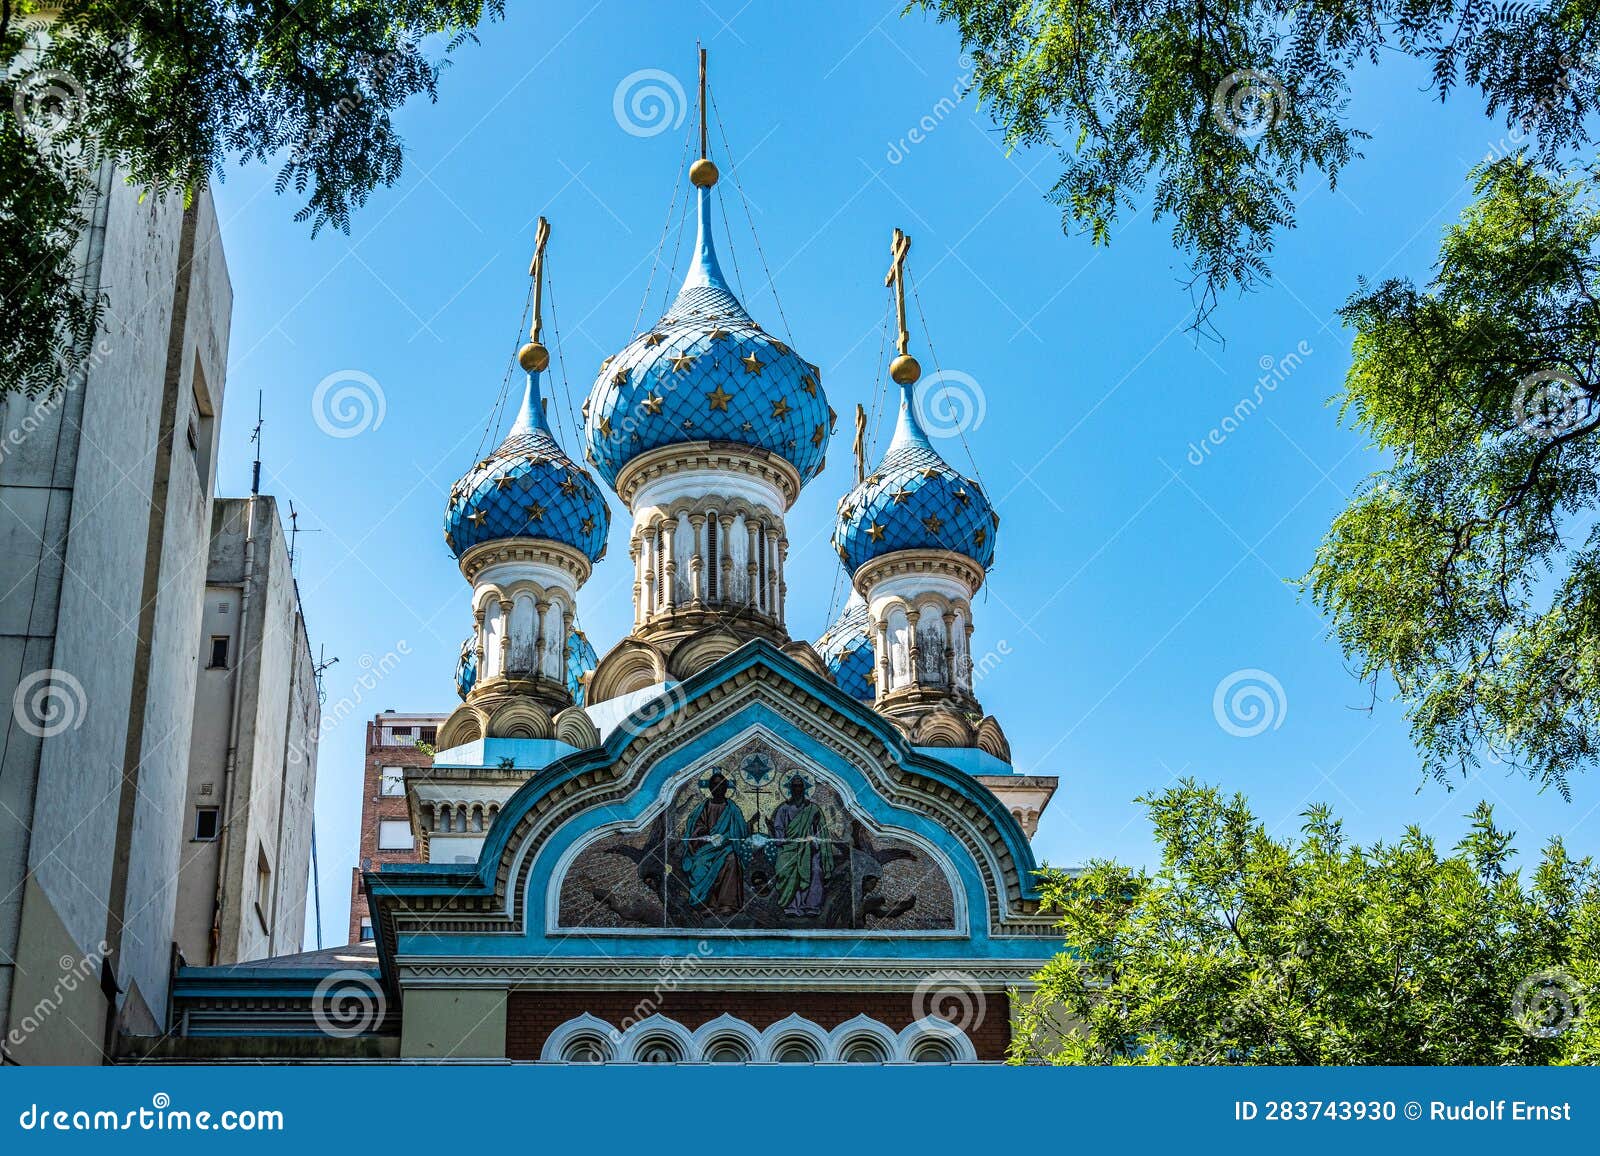 cathedral of the most holy trinity, catedral ortodoxa rusa de la santisima trinidad in buenos aires, argentina